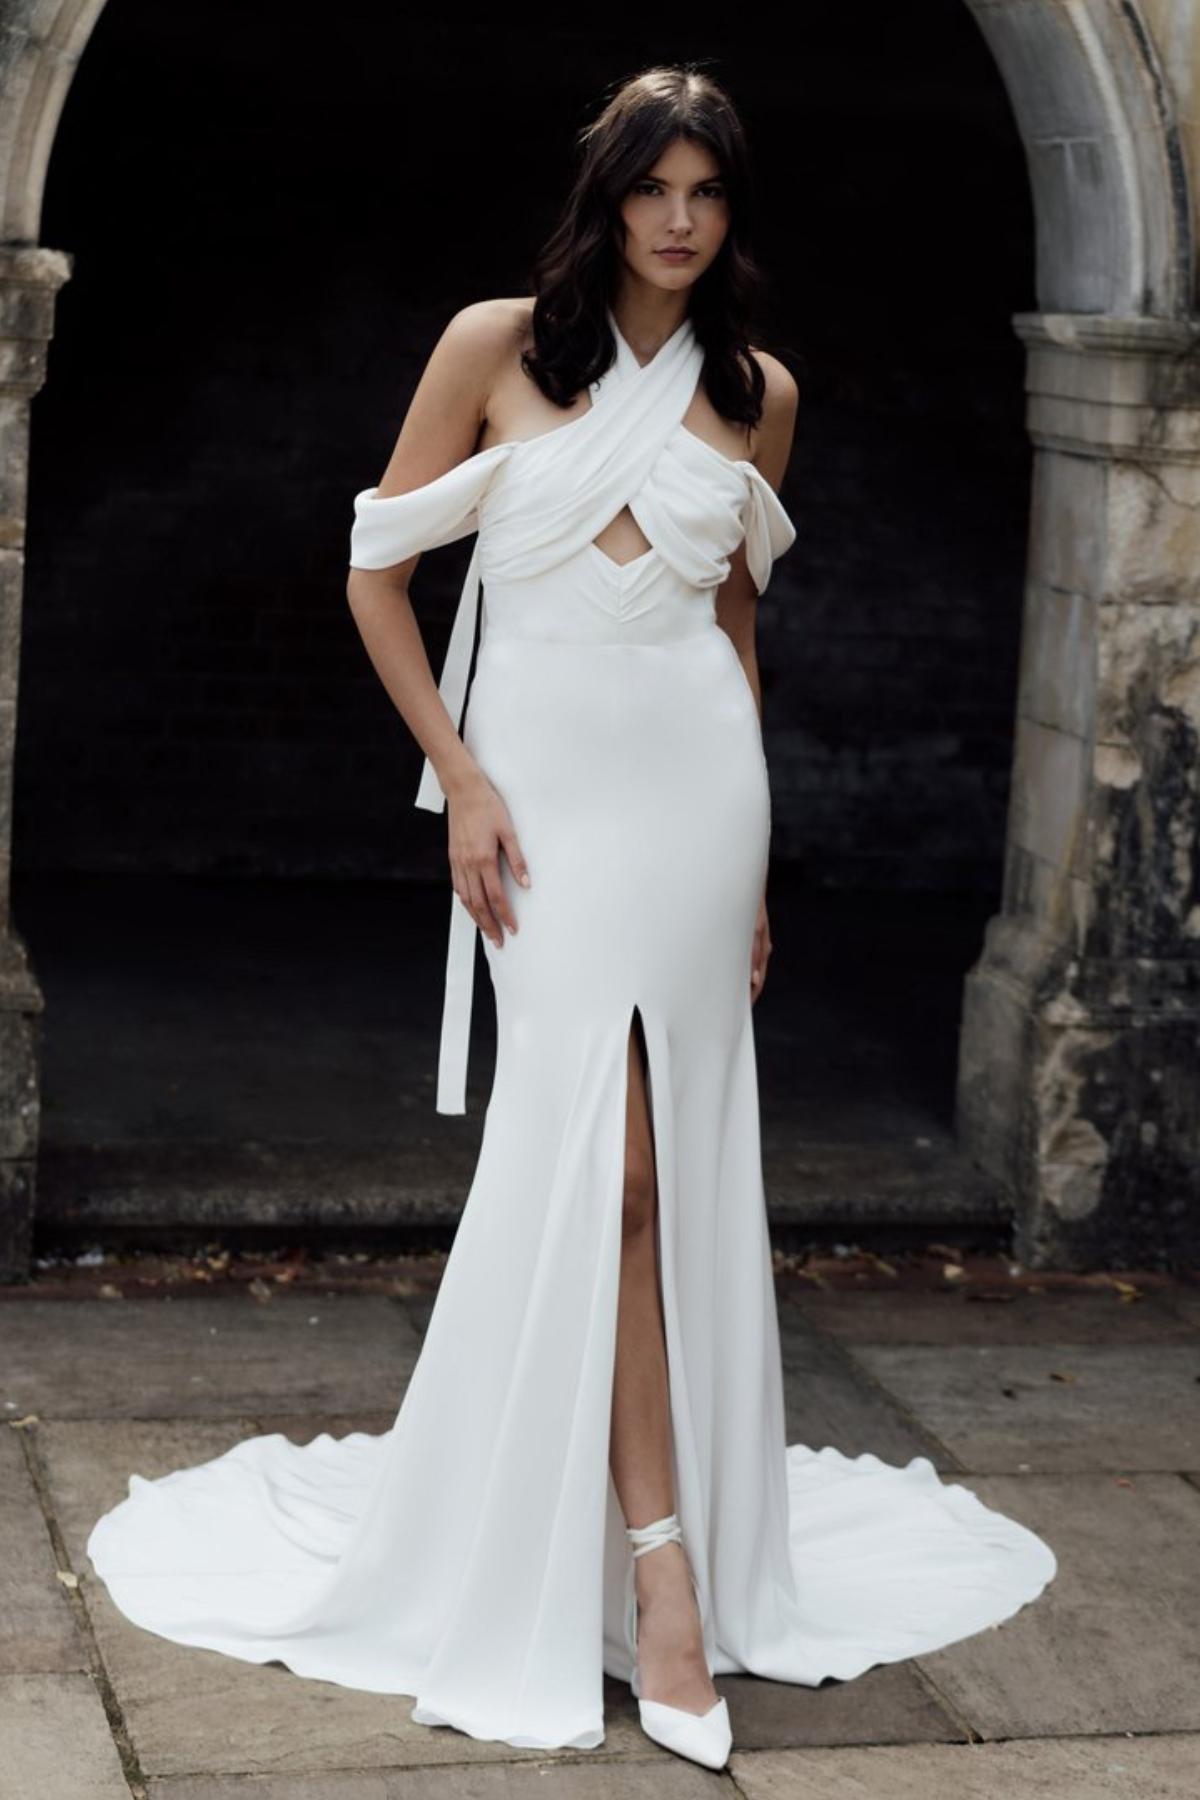 Loop Dress - The Ultimate Bridesmaid Convertible Dress